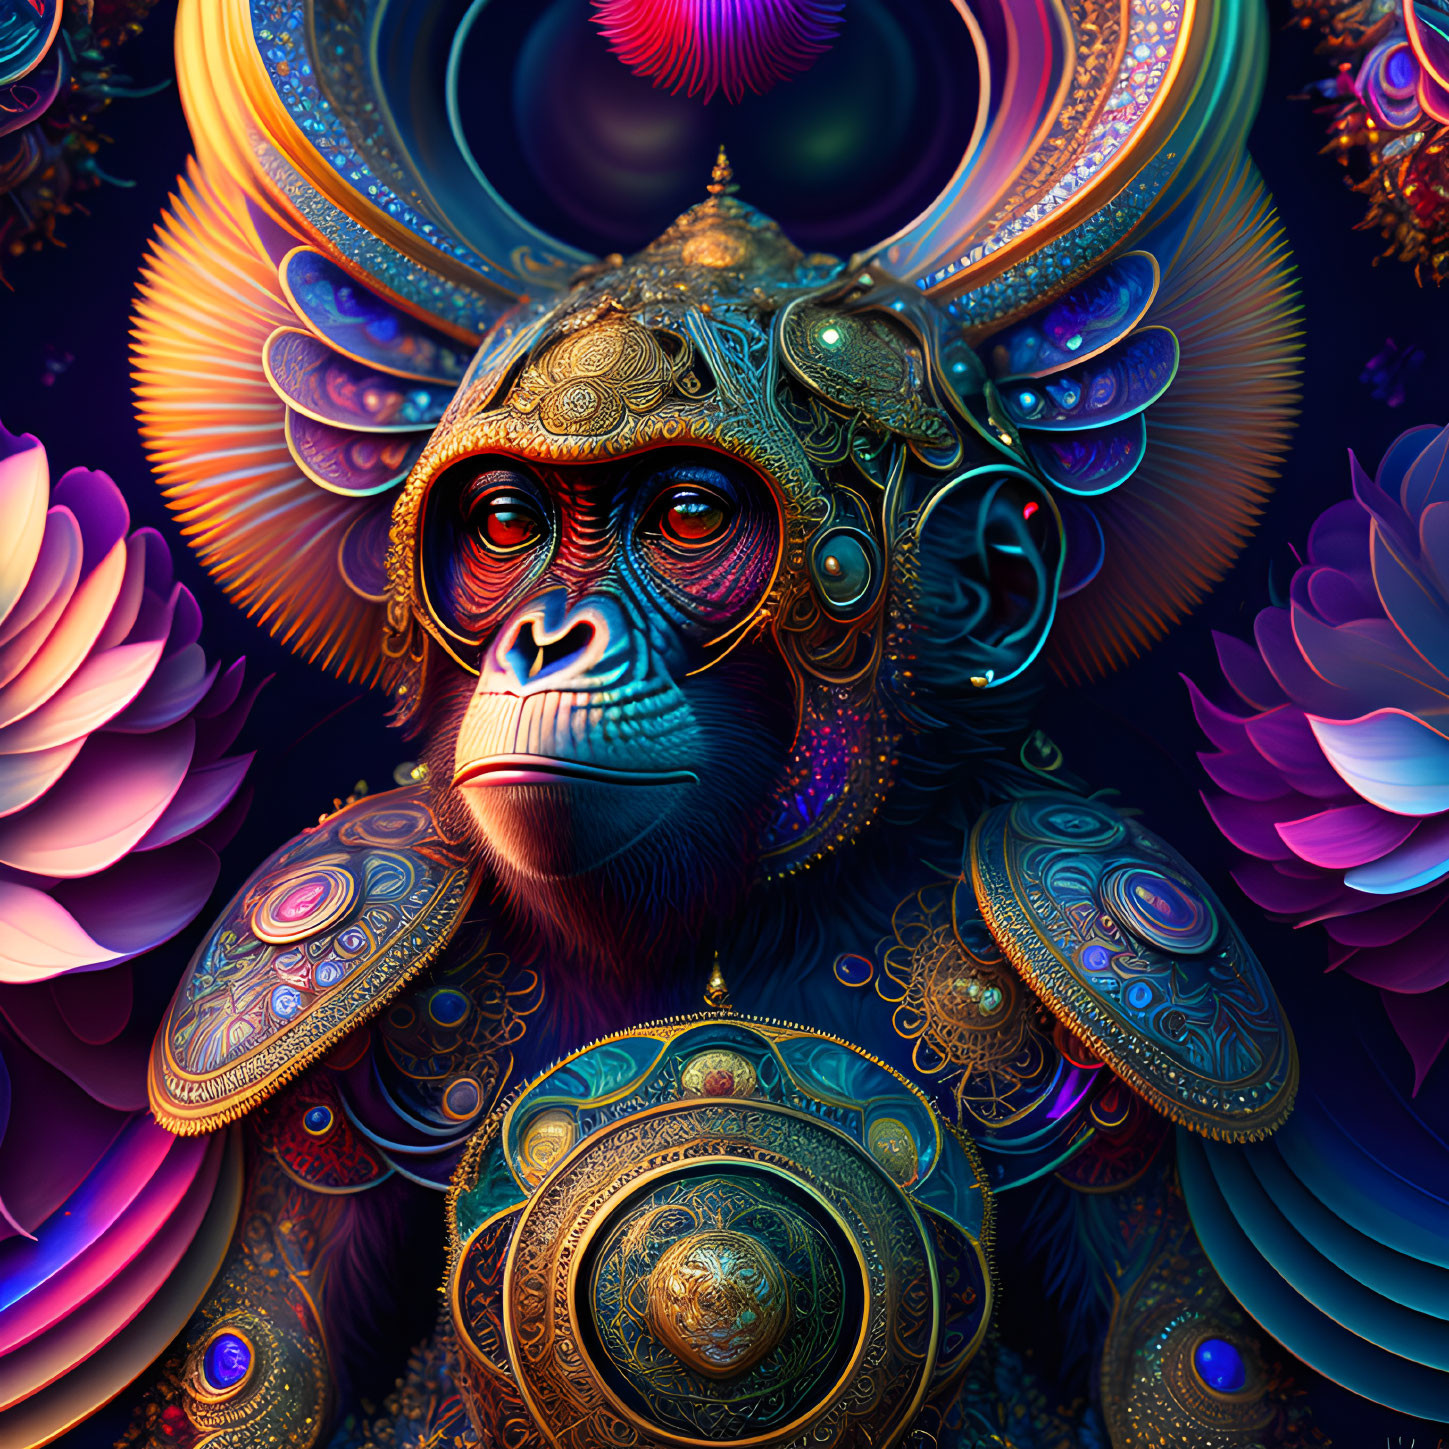 Colorful Stylized Monkey Art with Ornate Patterns